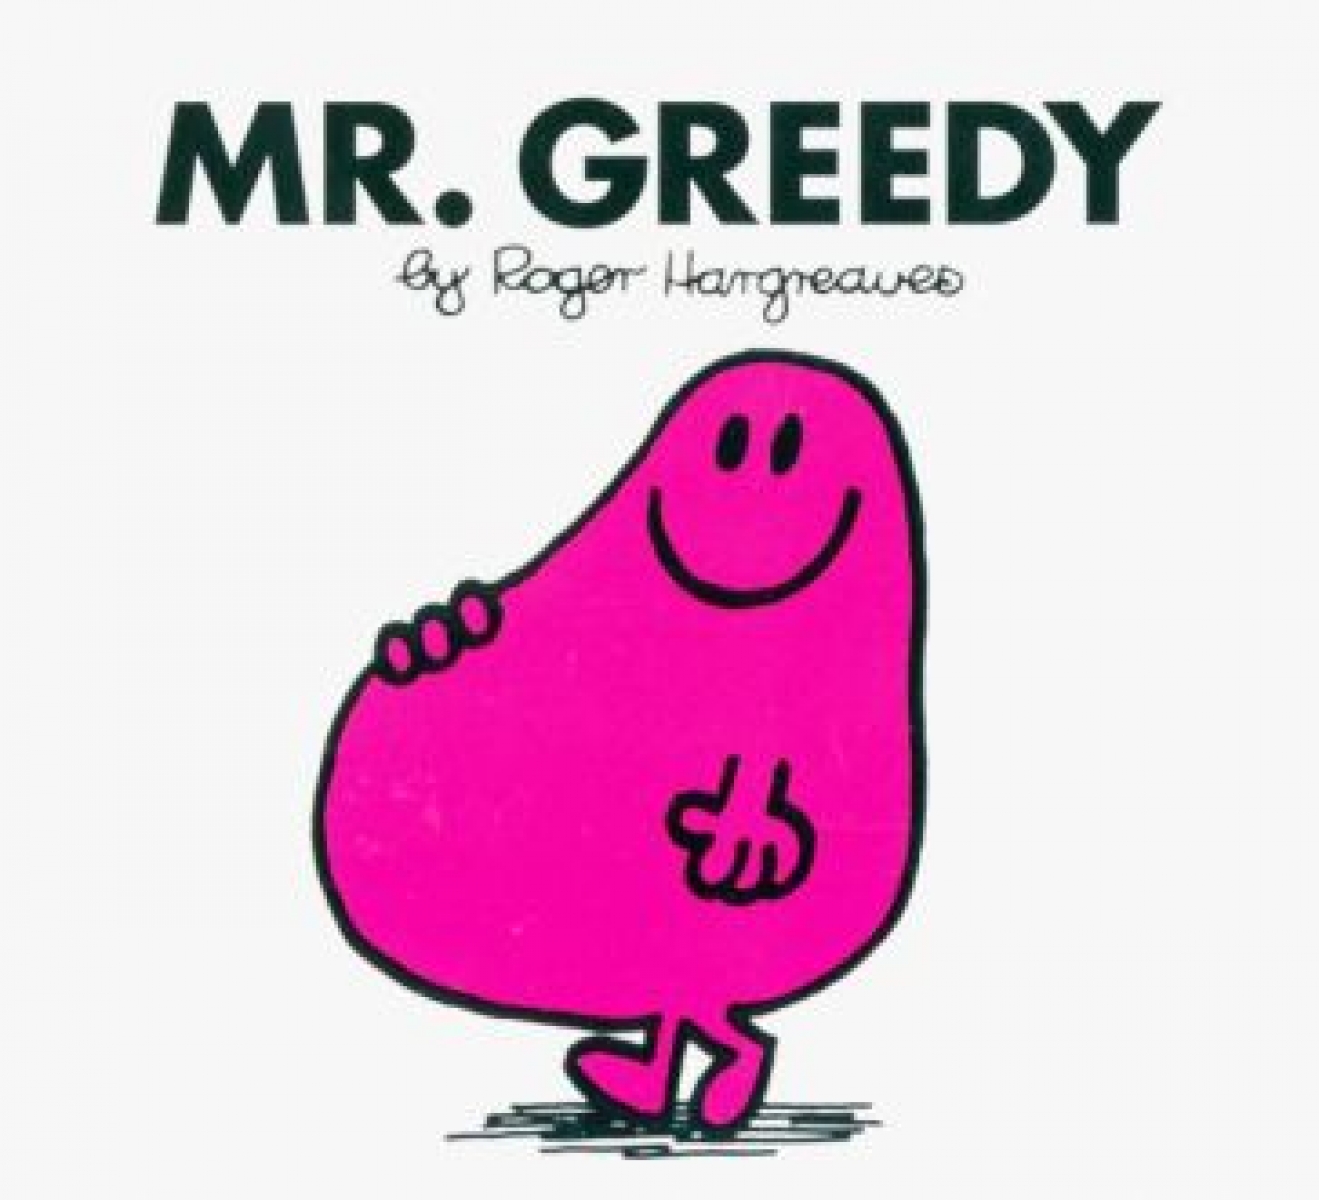 Hargreaves Roger Mr. Greedy 